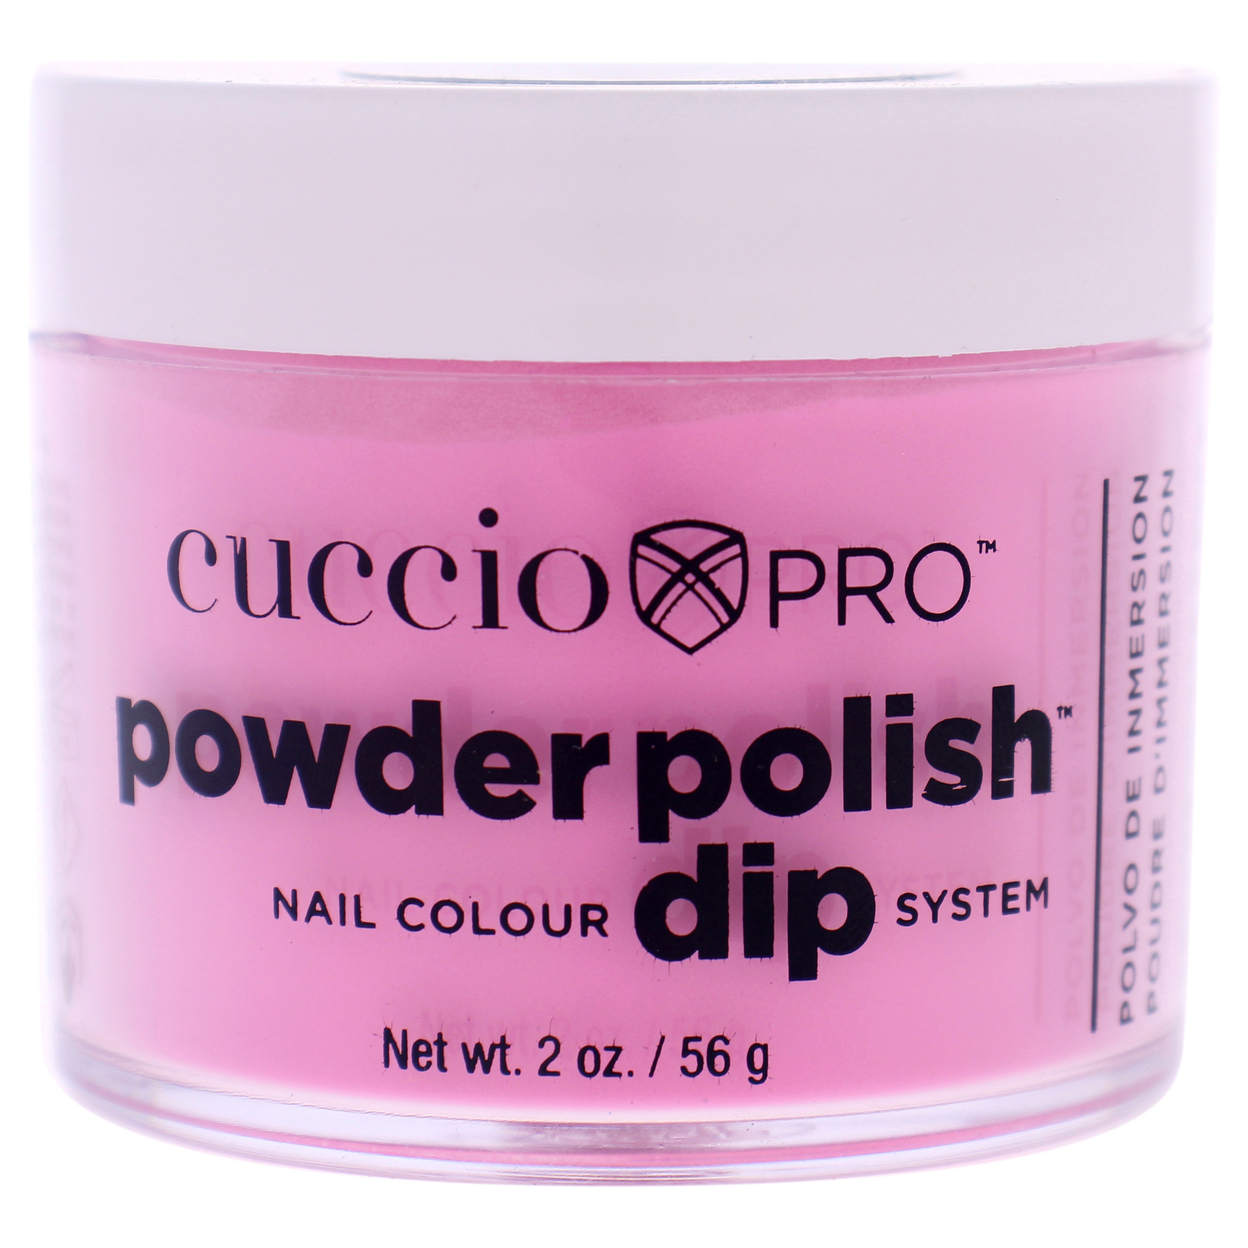 Cuccio Colour Pro Powder Polish Nail Colour Dip System - Bright Neon Pink Nail Powder 1.6 Oz